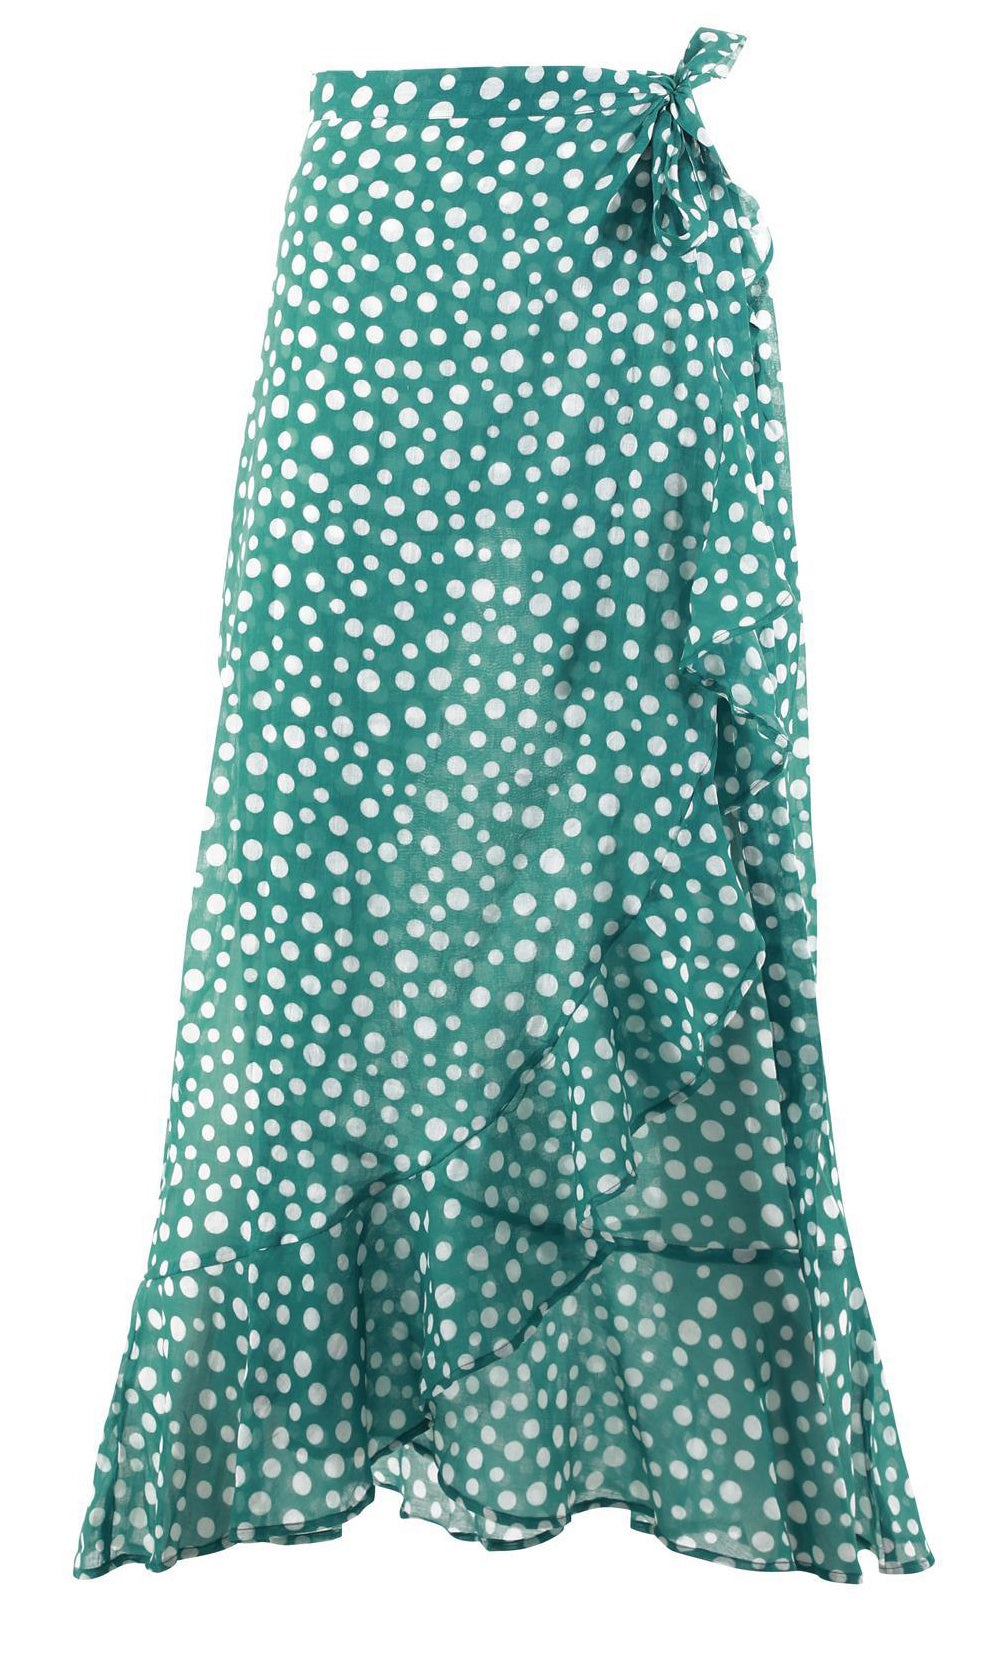 Skirt Emerald Park, Special Order S - XL